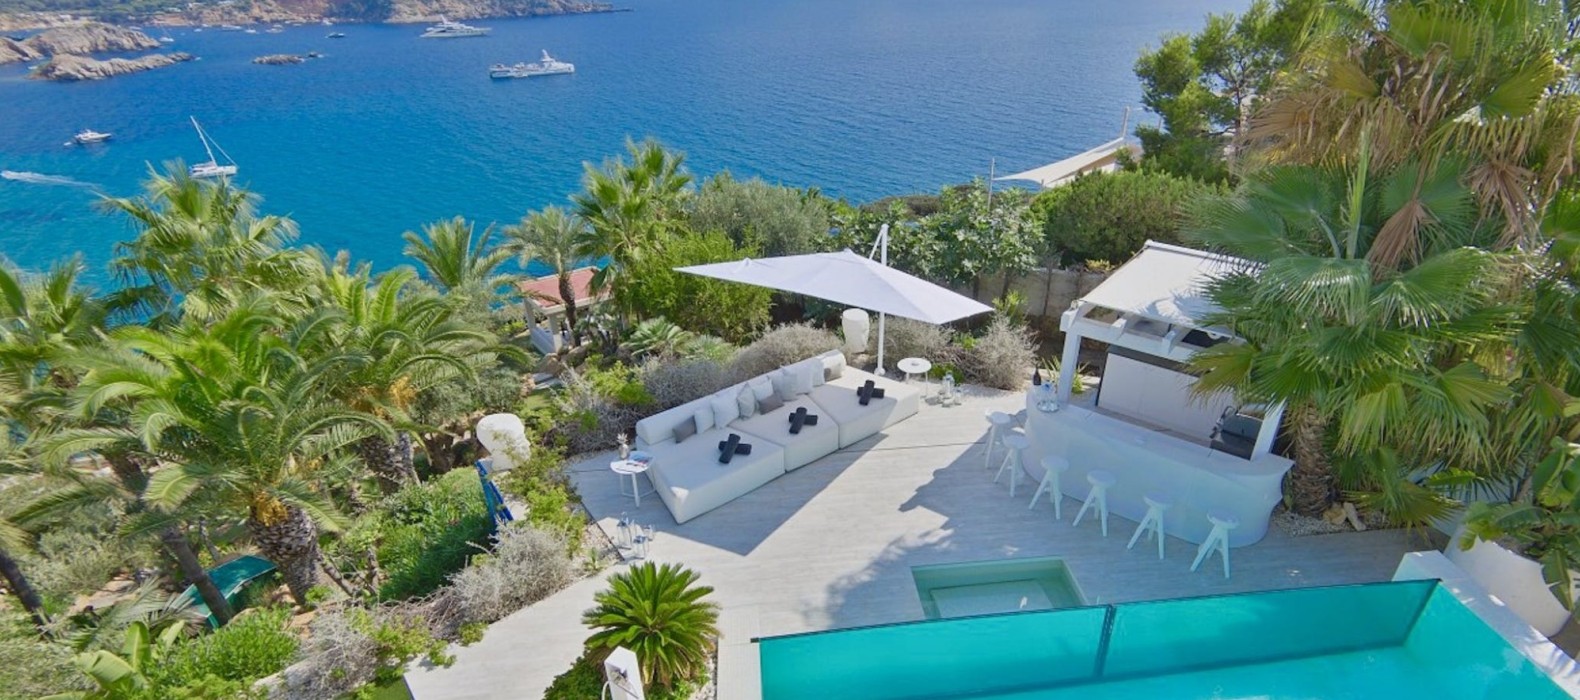 Exterior pool view of Villa Benahavis in Ibiza